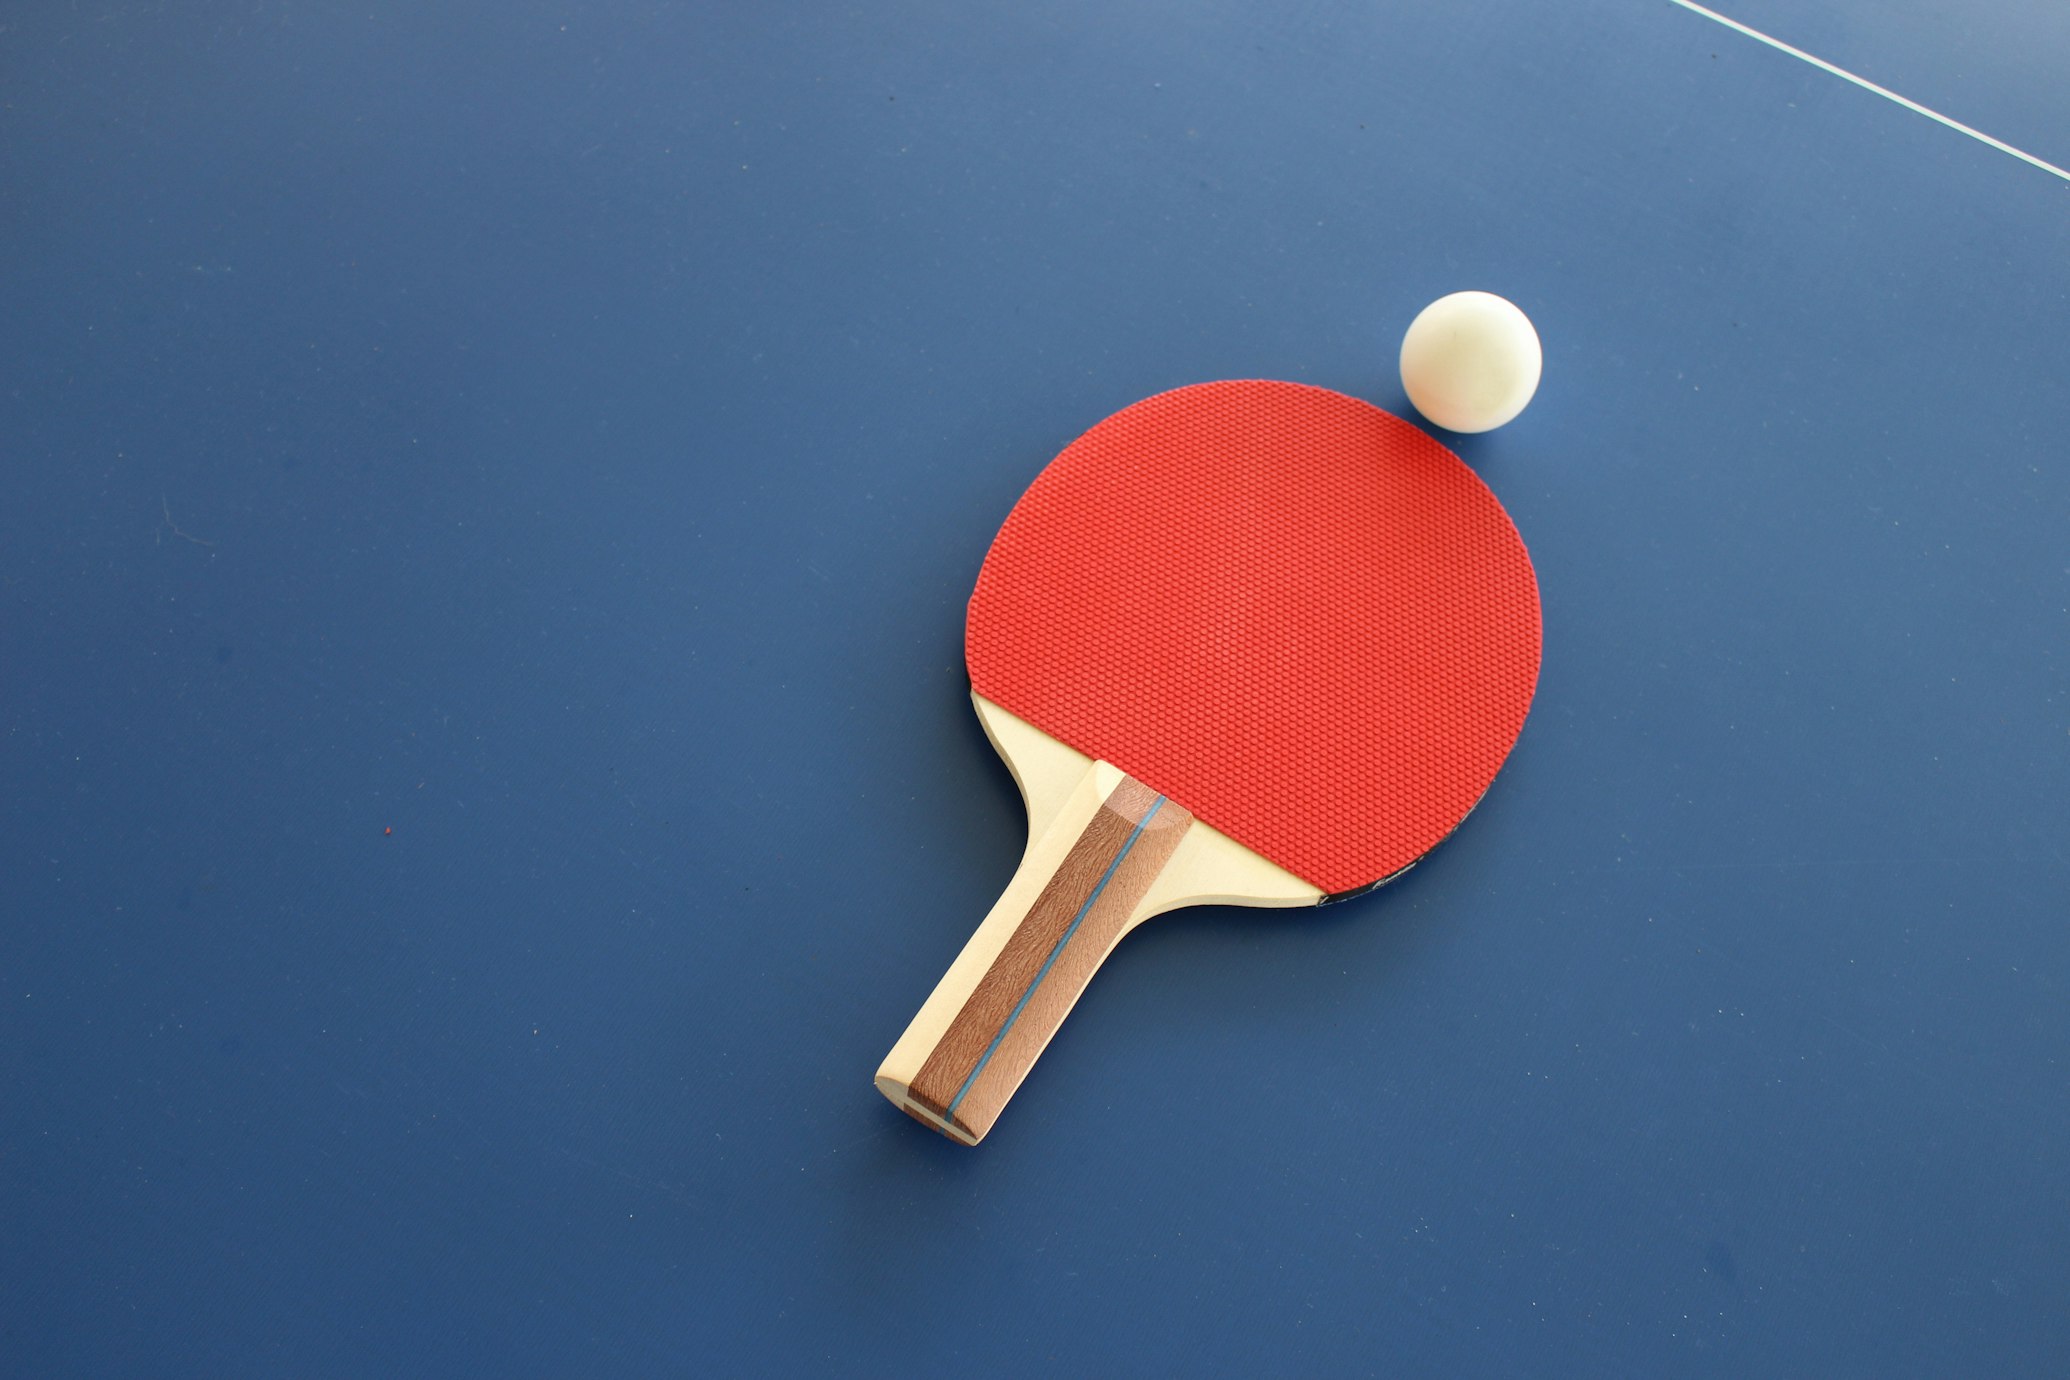 Ping Pong racket and ball on table tennis